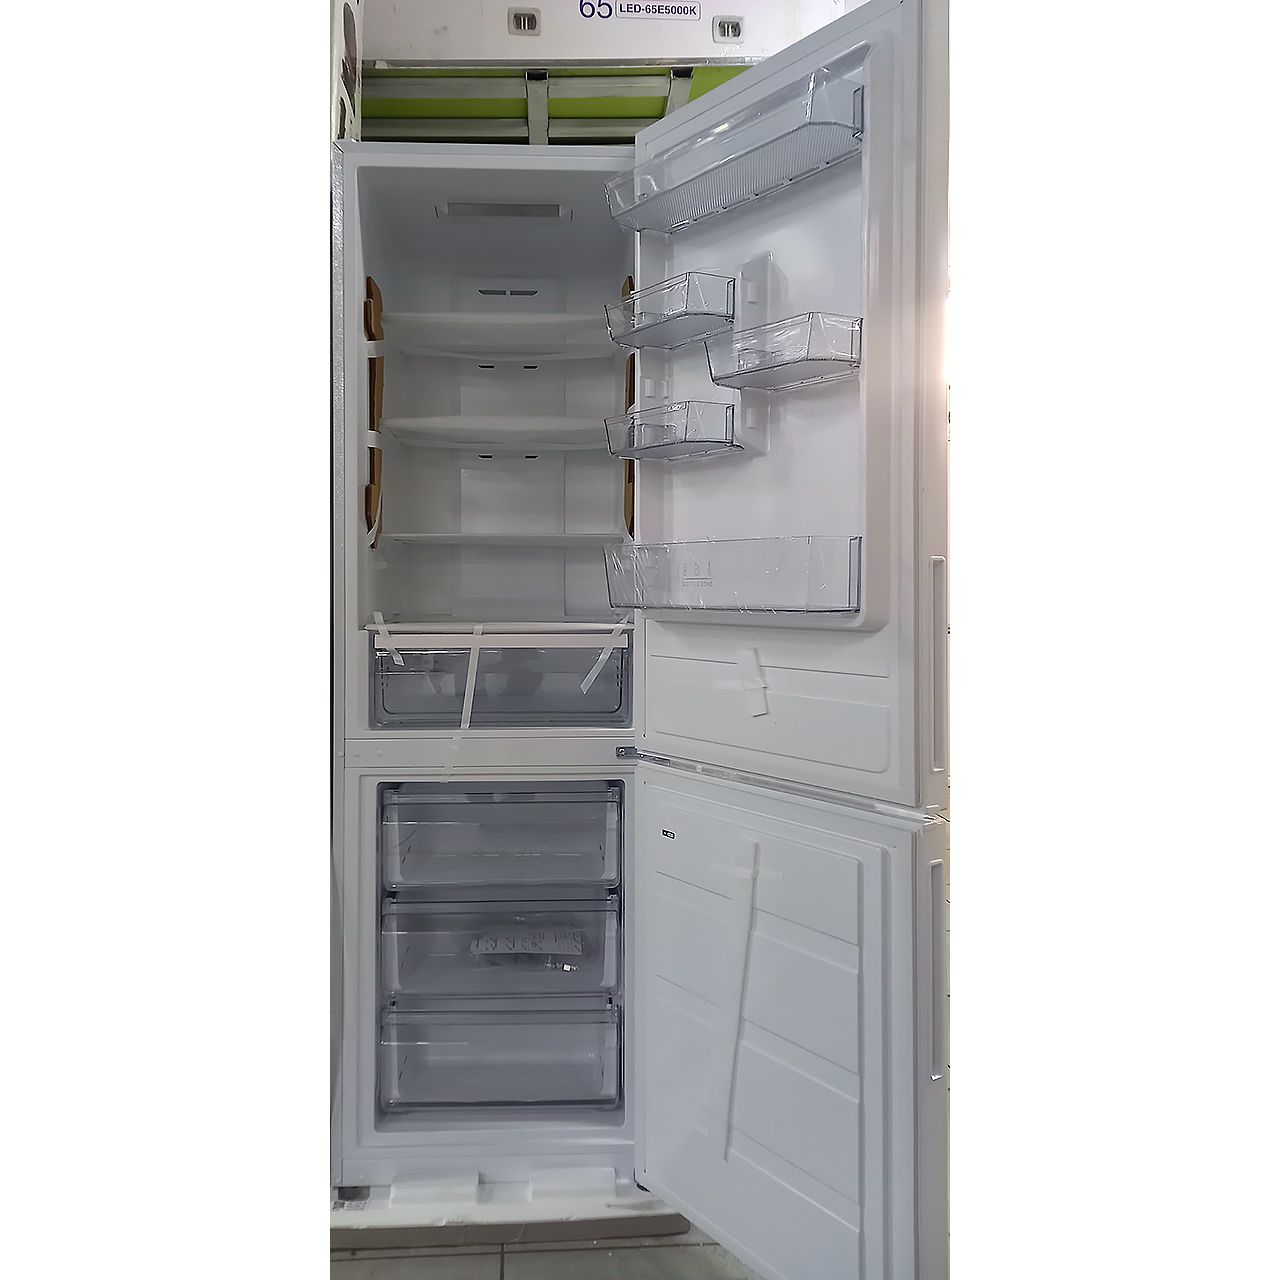 Холодильник двухкамерный Blesk 302 литра